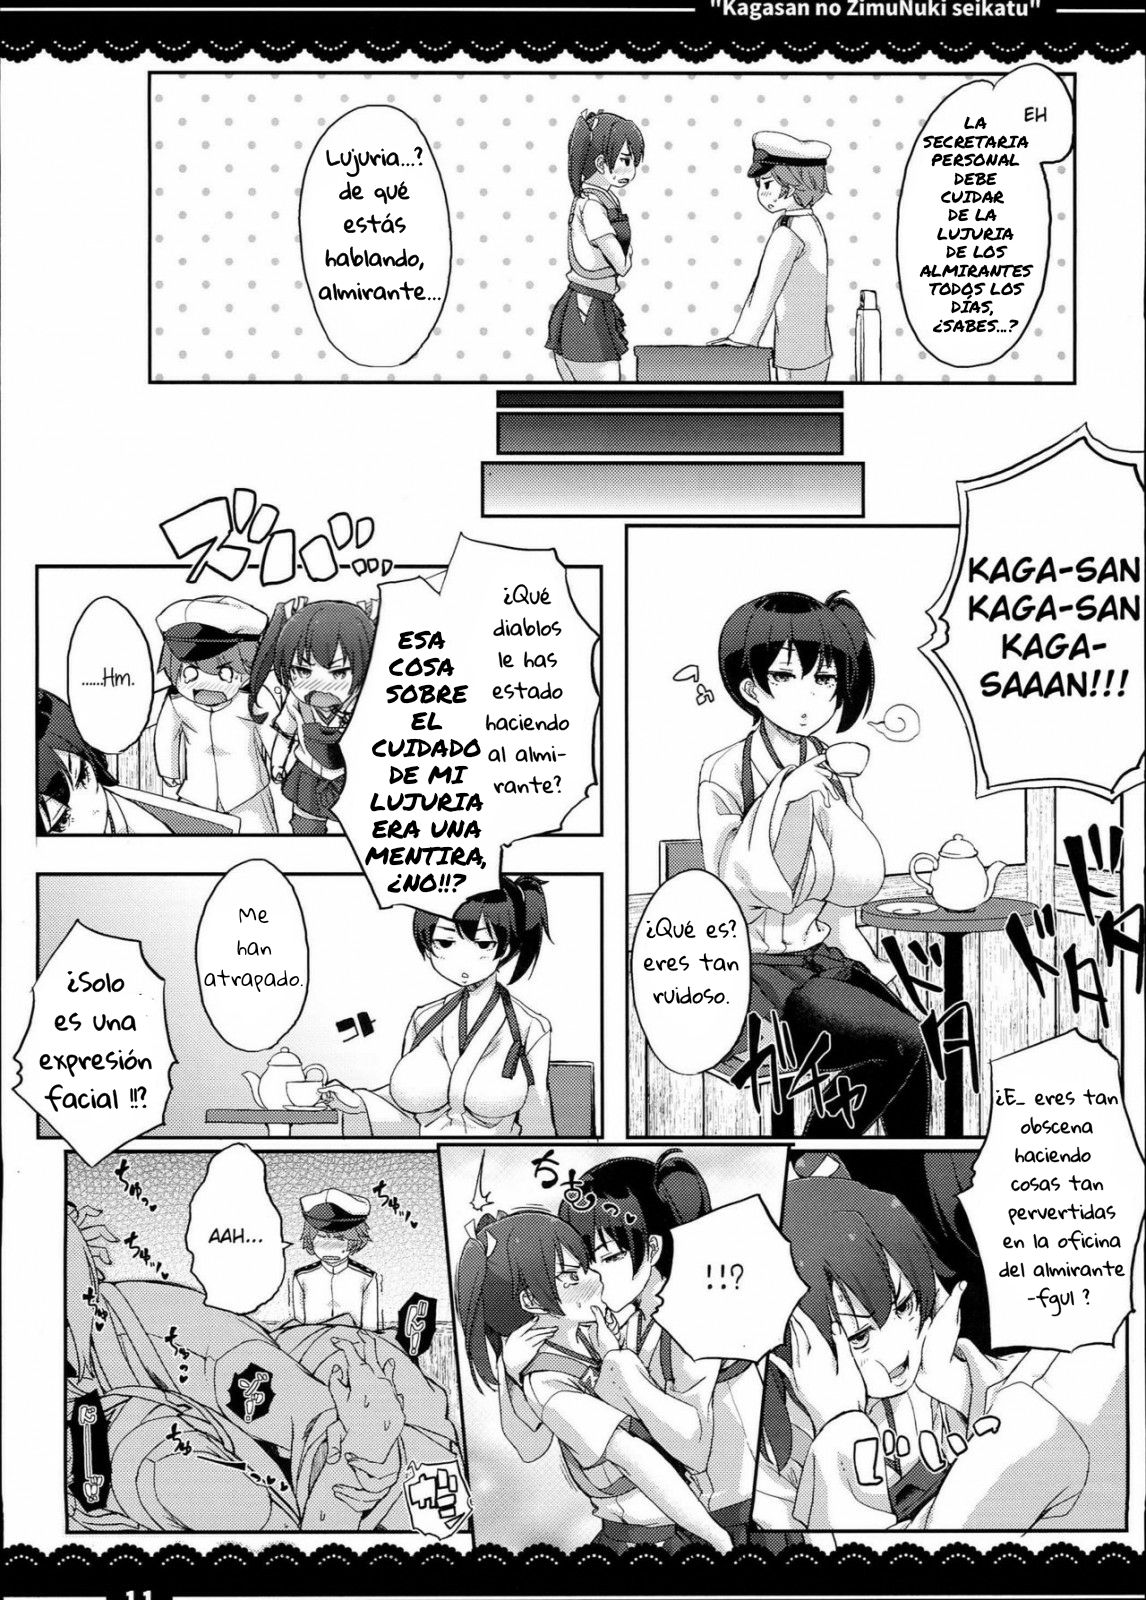 kaga-san's work skipping sex life-chapter 1 - 11